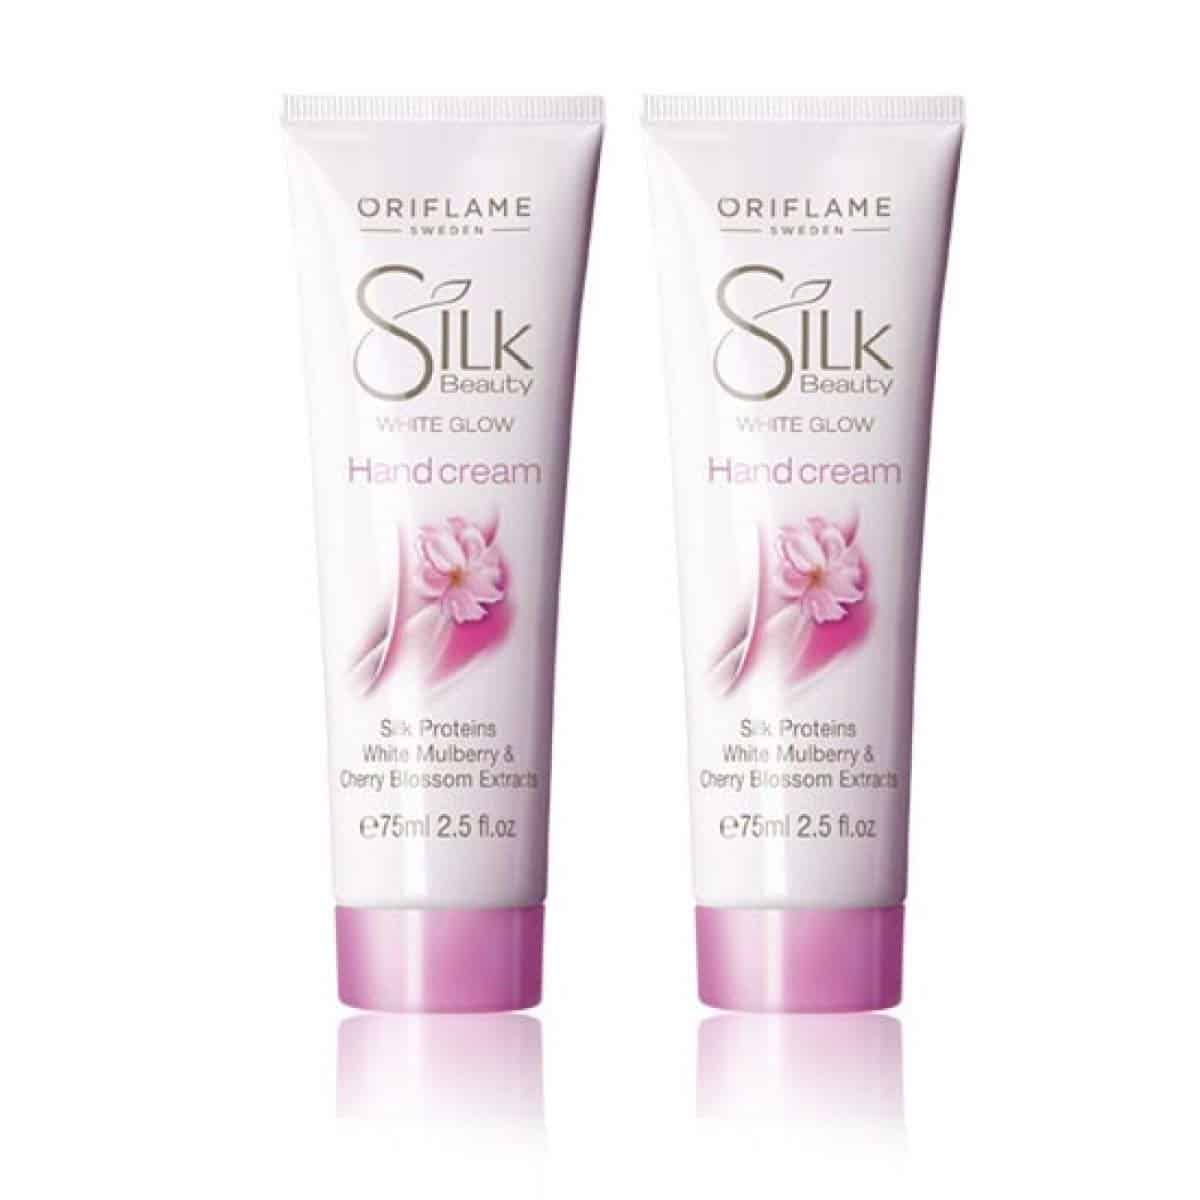 Oriflame Silk Beauty Hand Cream